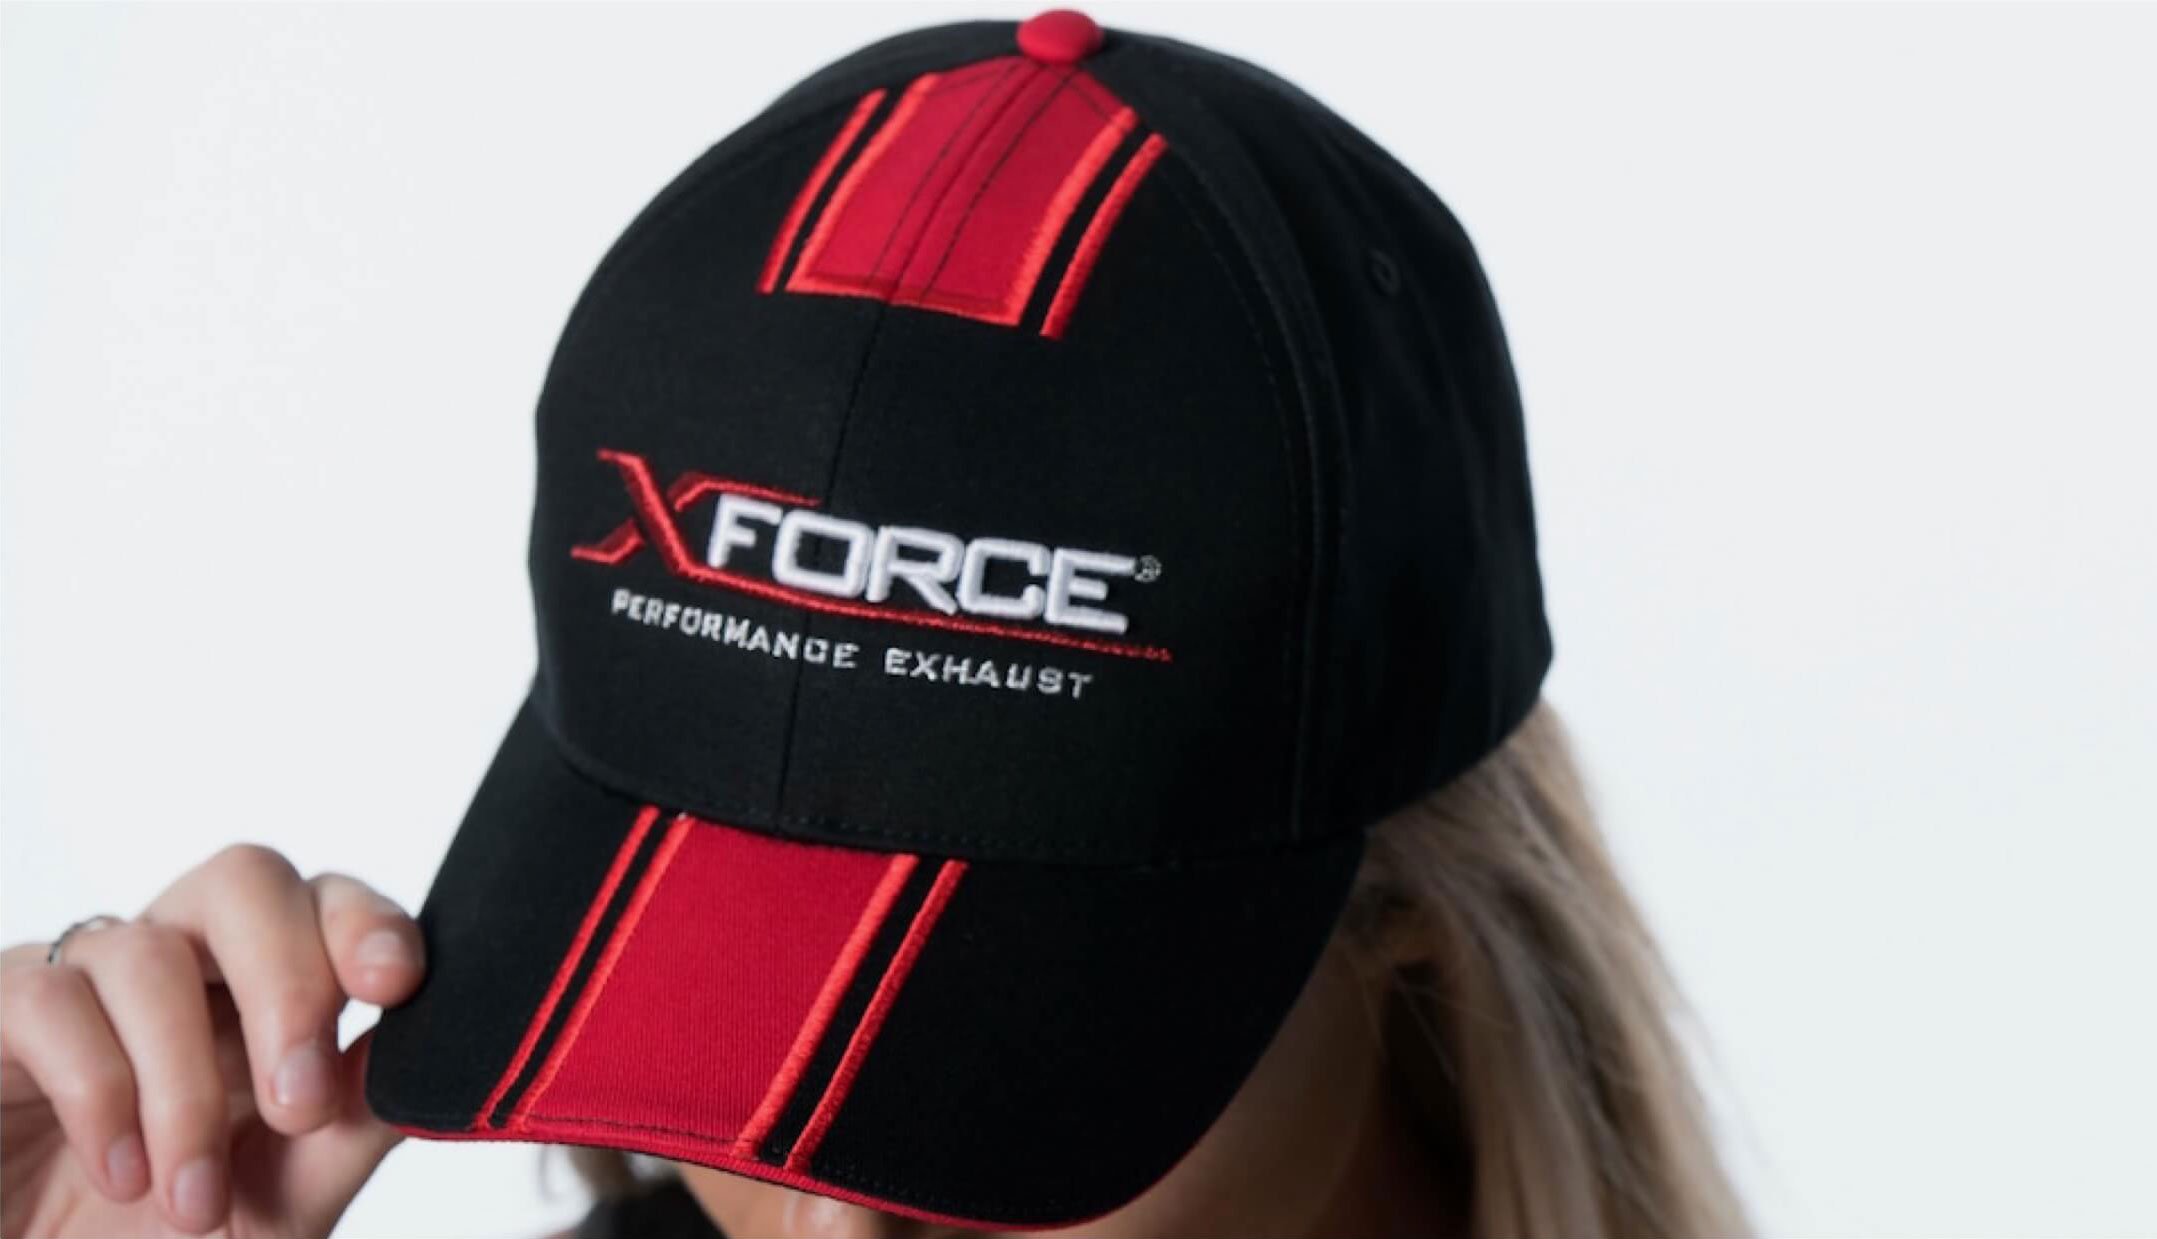 https://xforce.com.au/wp-content/uploads/2019/10/XFORCE-Merchandise.jpg